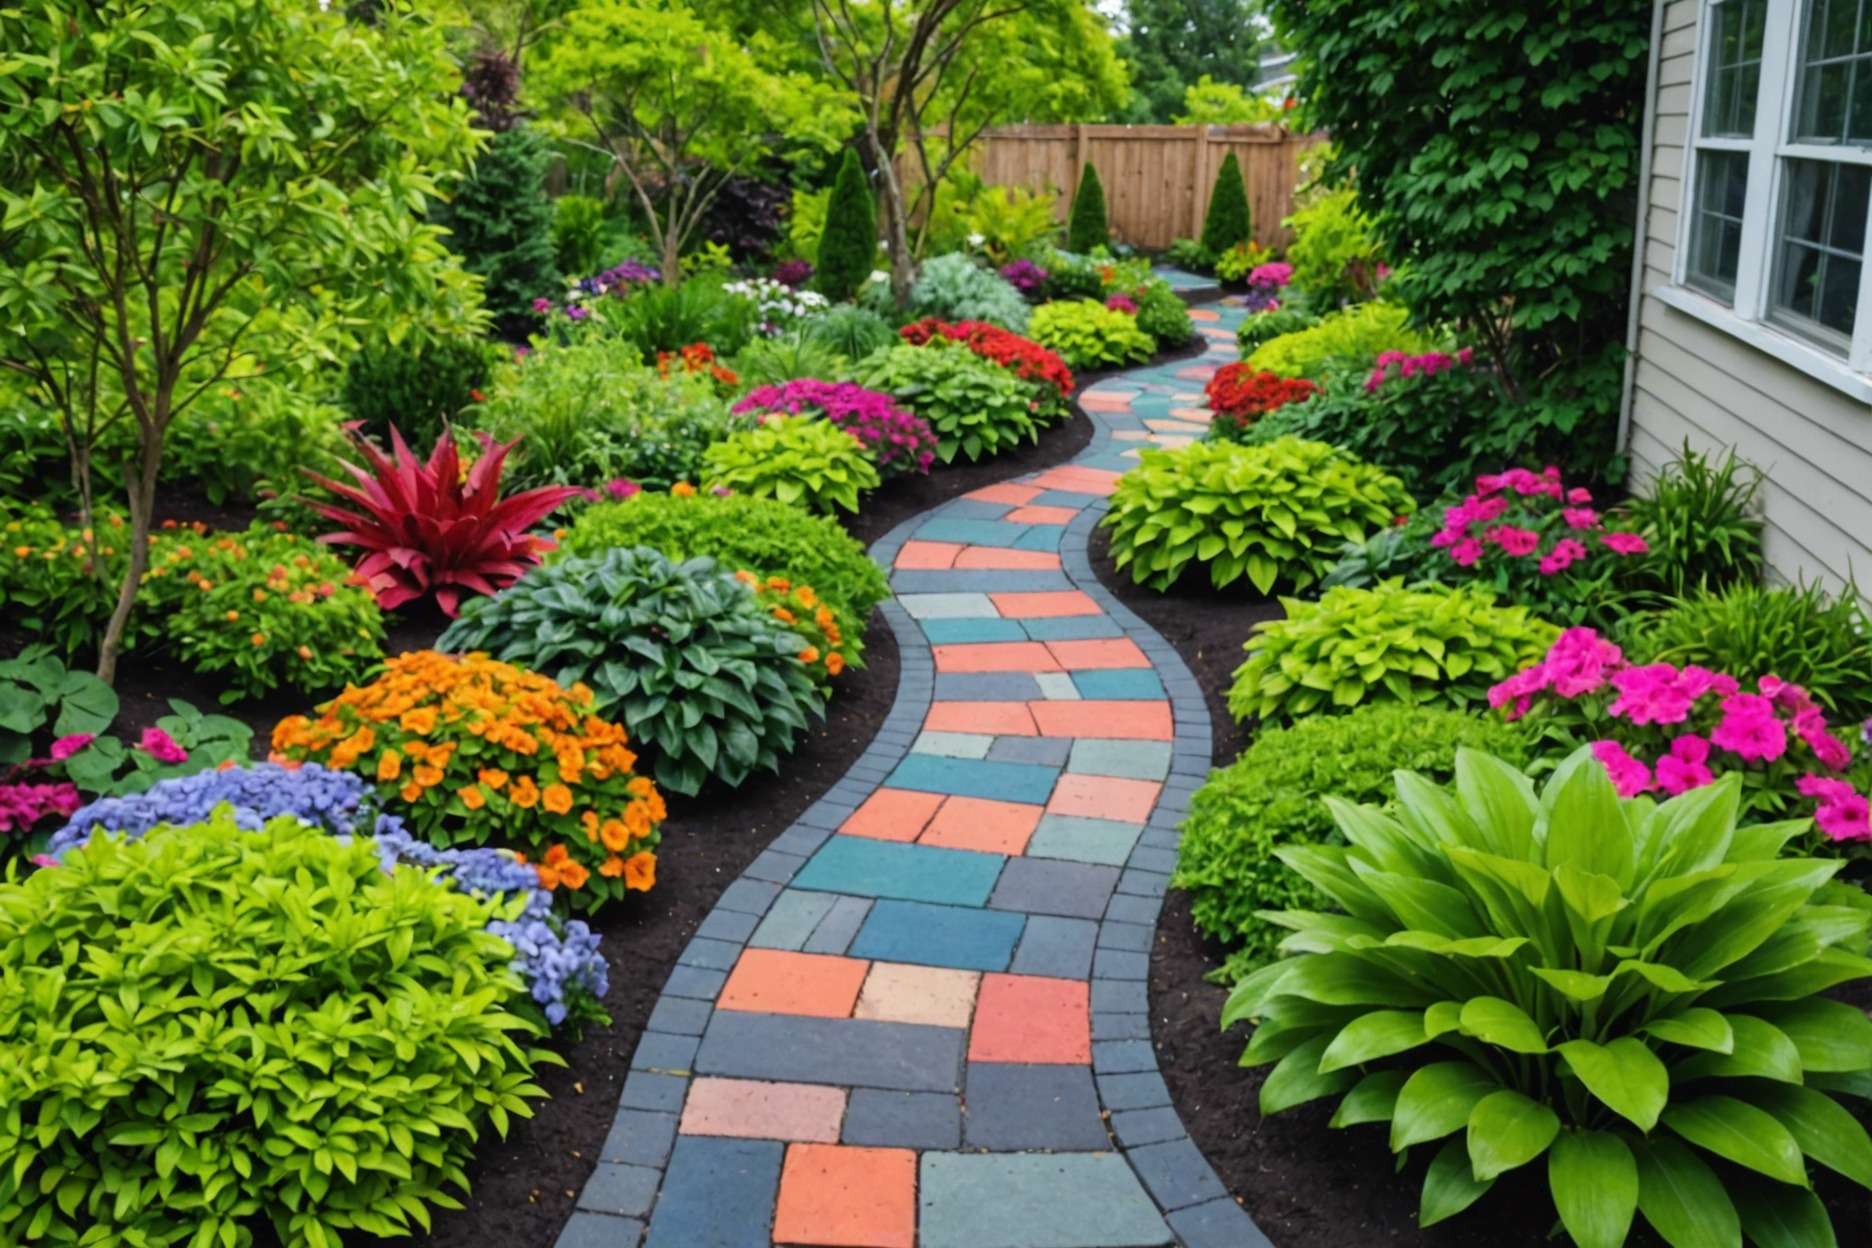 Colorful paver pathways winding through a lush garden